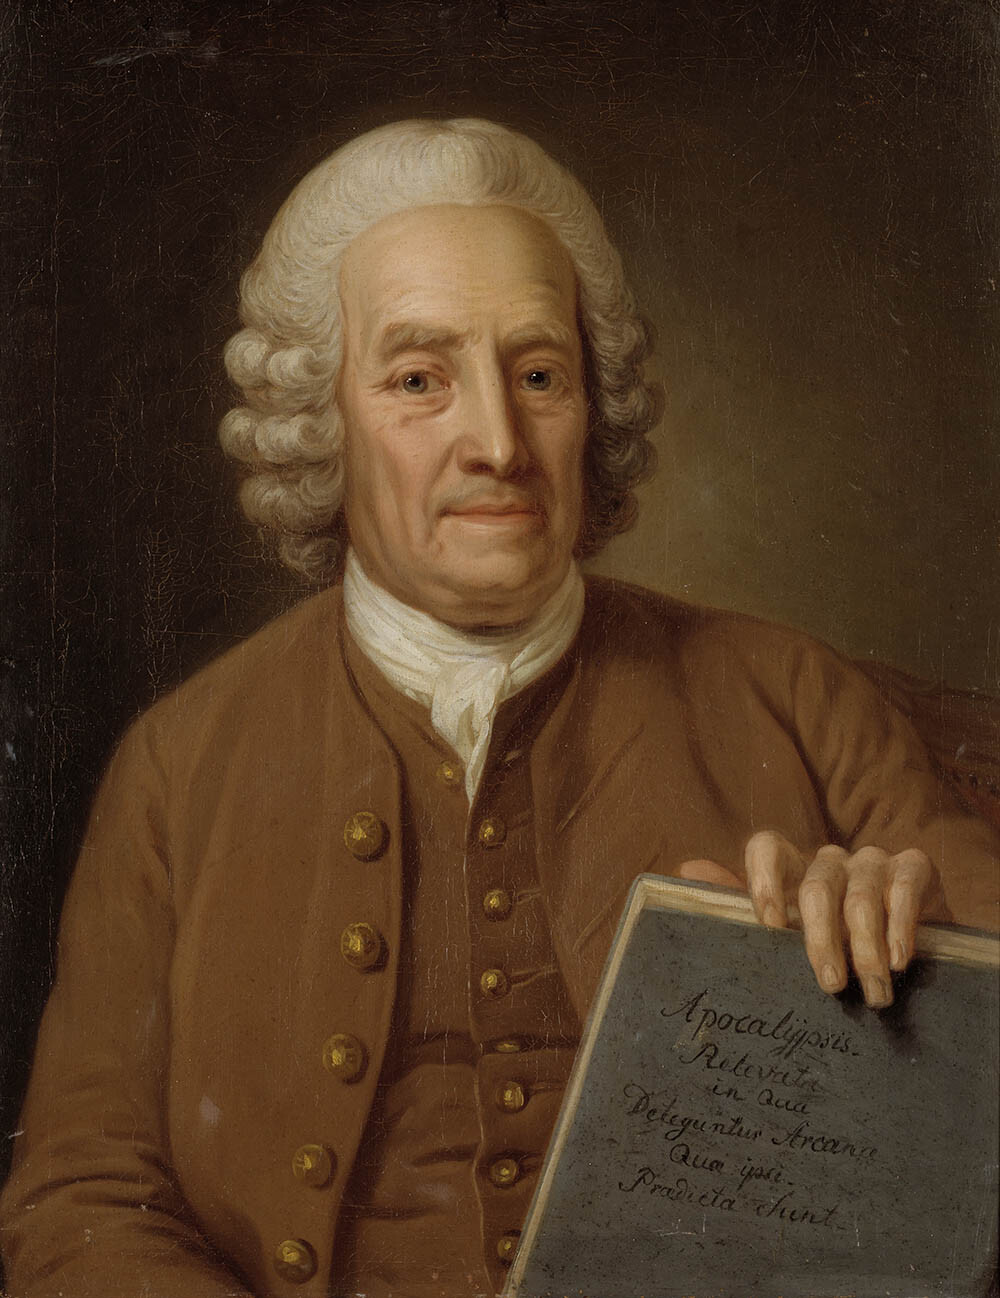 Emanuel Swedenborg, tavla av Per Krafft d.ä. Nationalmuseum.